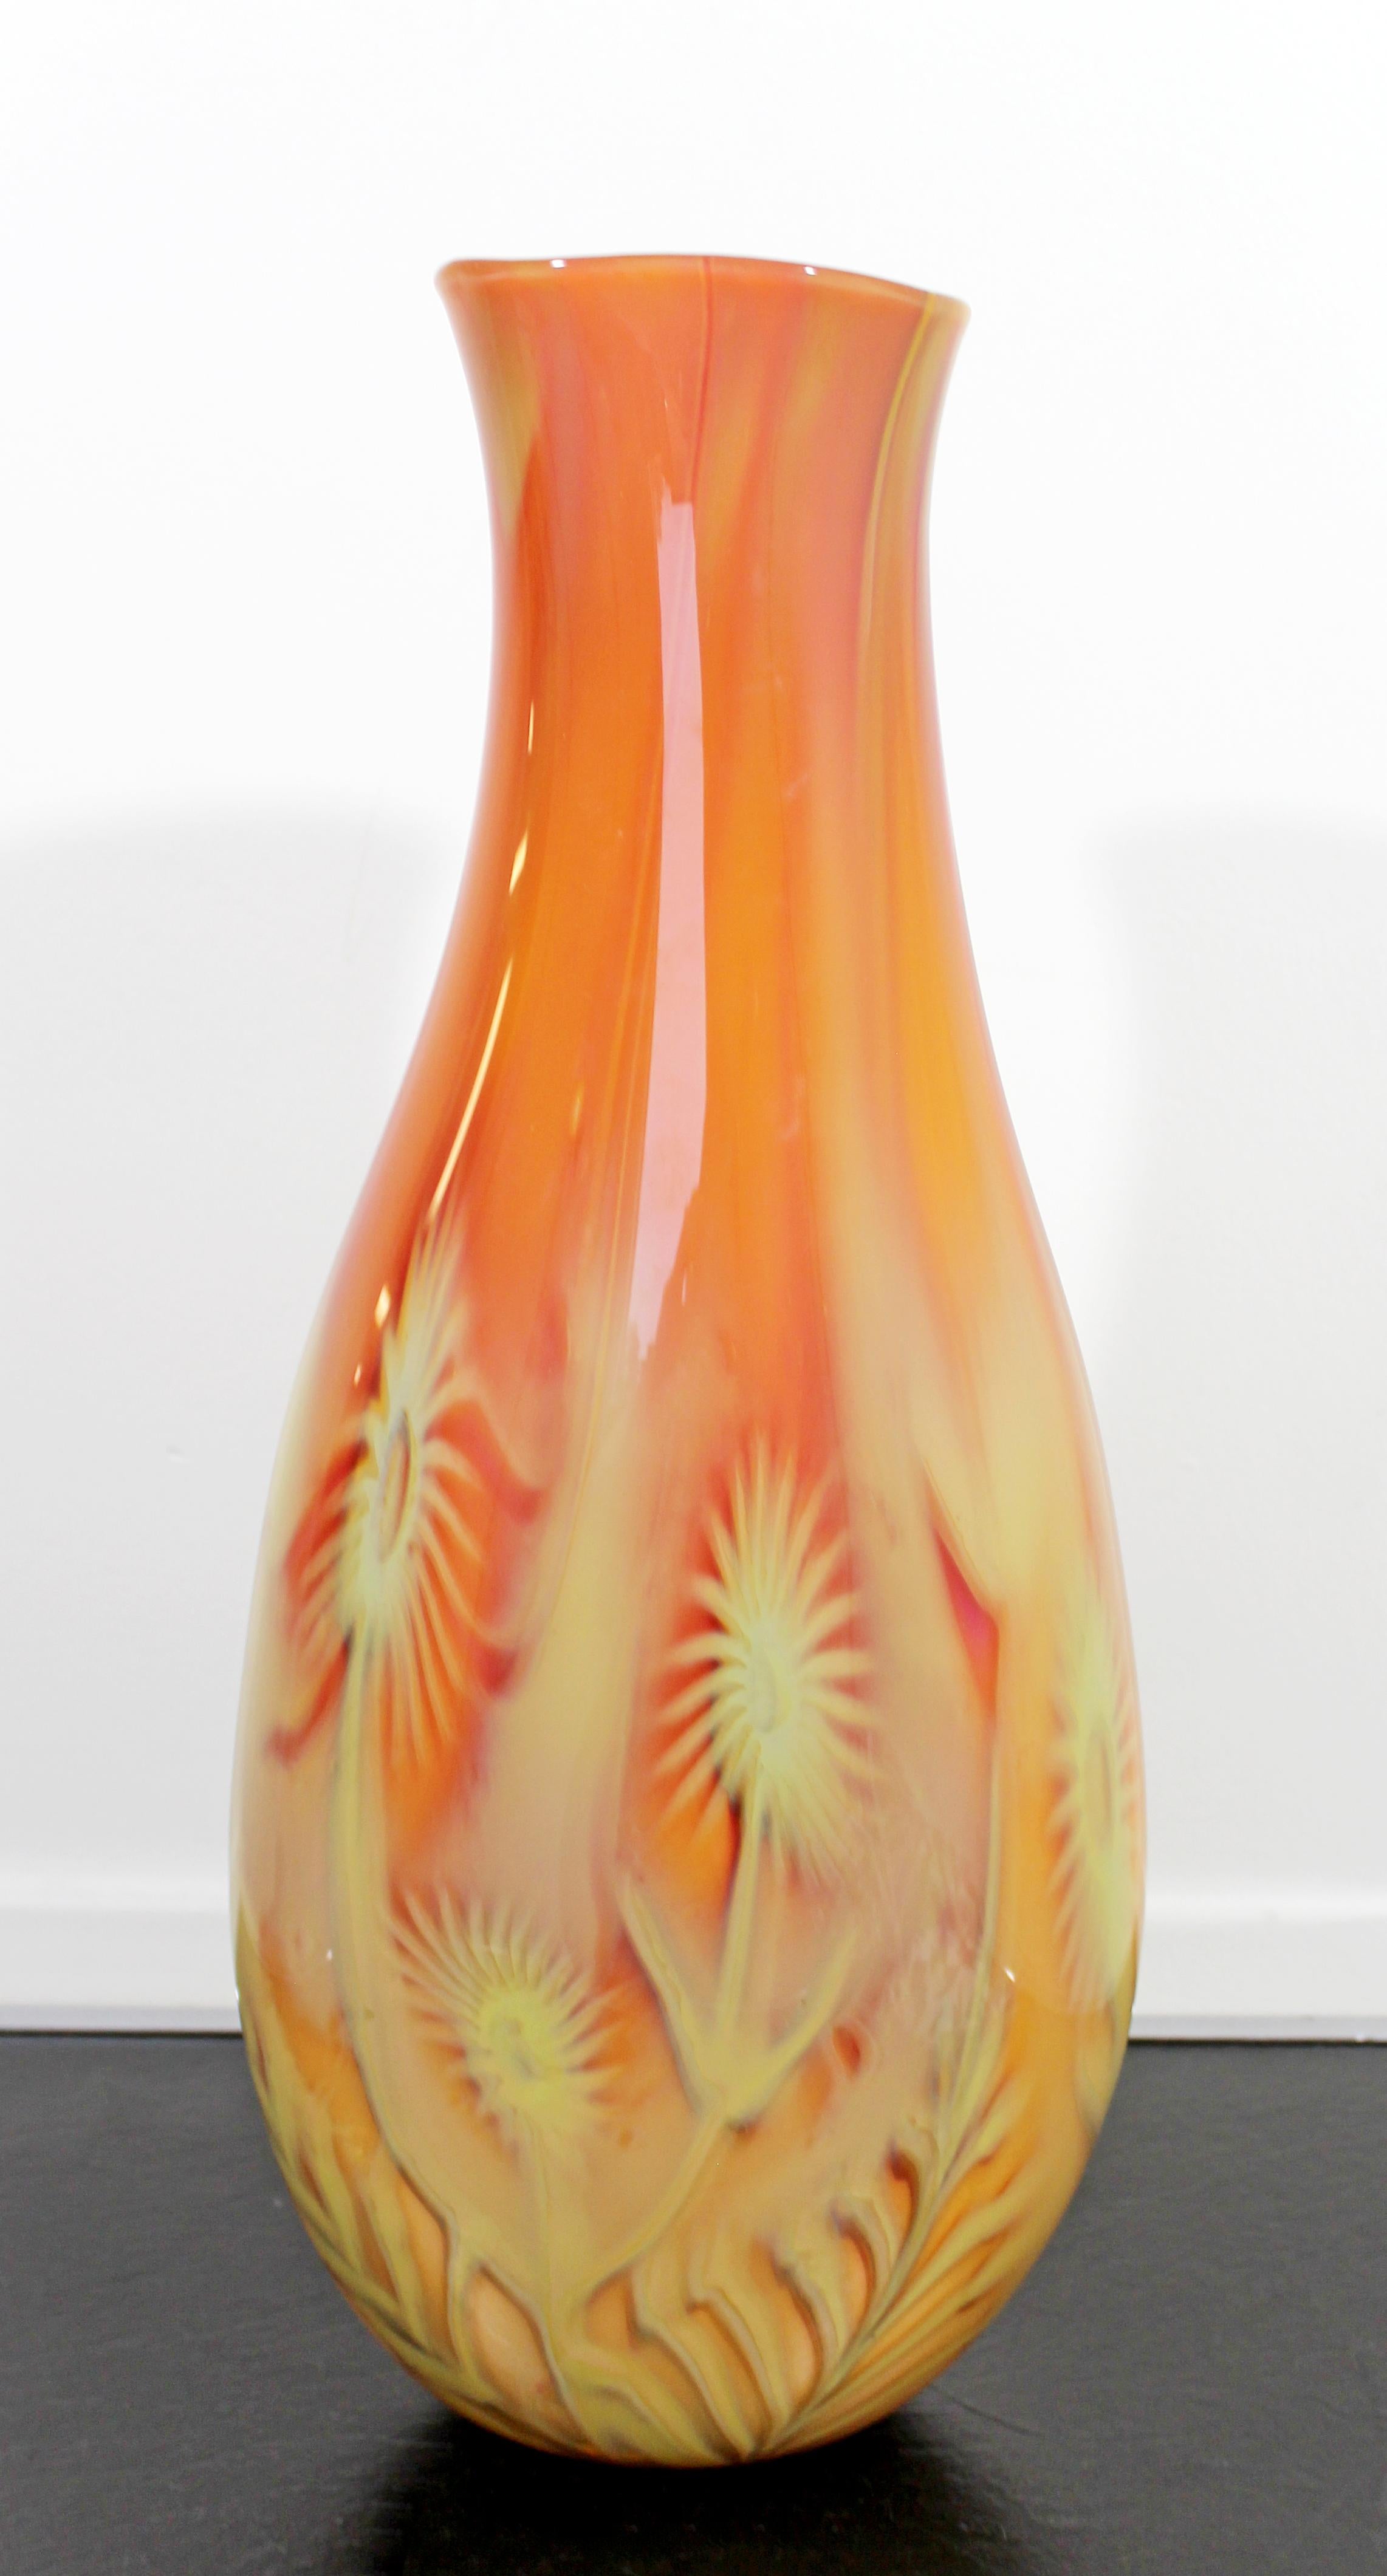 Blown Glass Contemporary Modern Renato Foti Signed Glass Art Sculpture Vase, Italy, 2000s